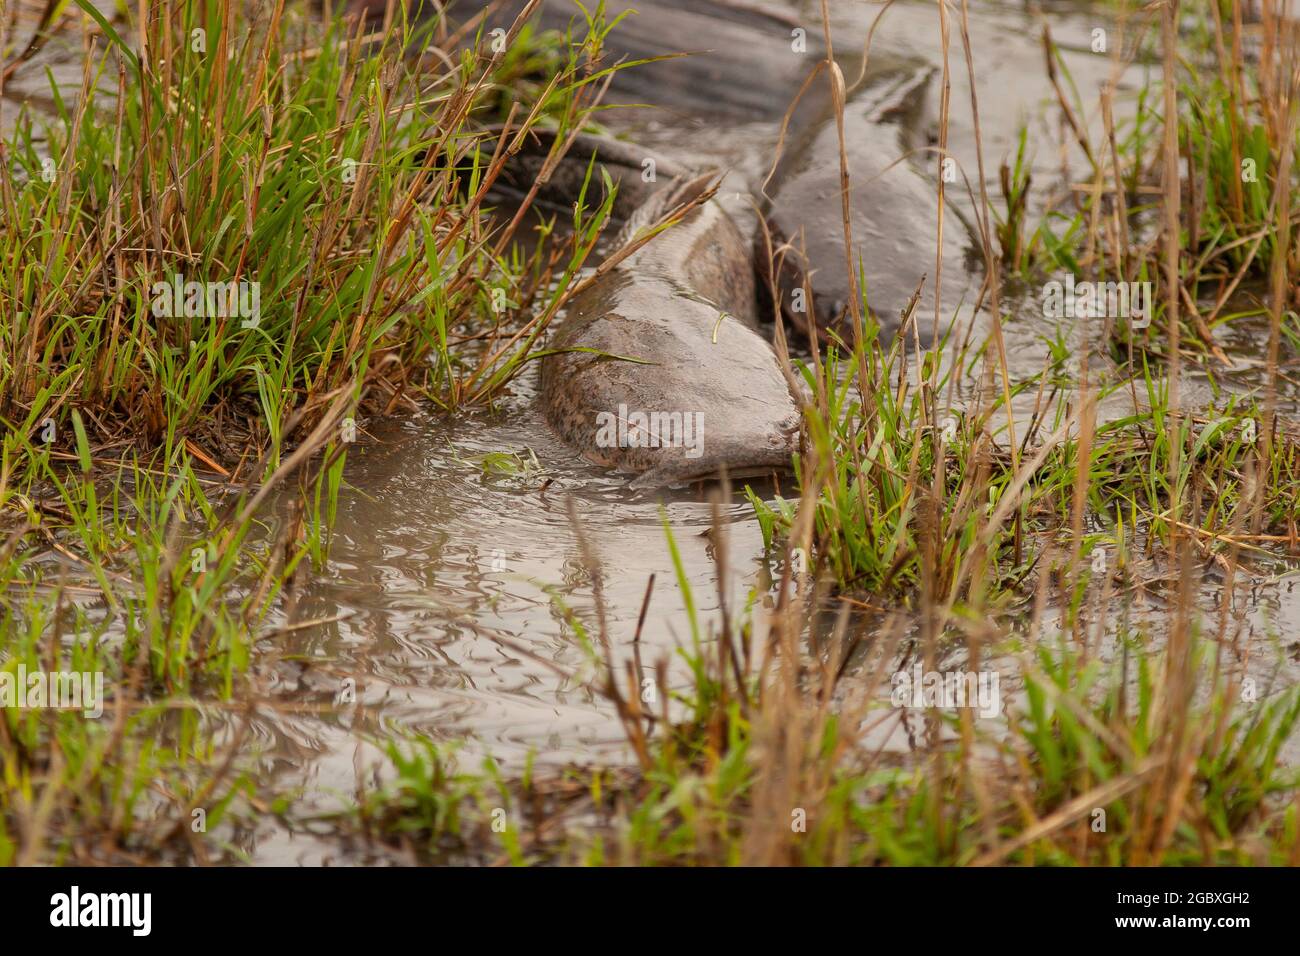 Walking Catfish (Clarias batrachus) make their way across land to spawn in small rainpools Stock Photo